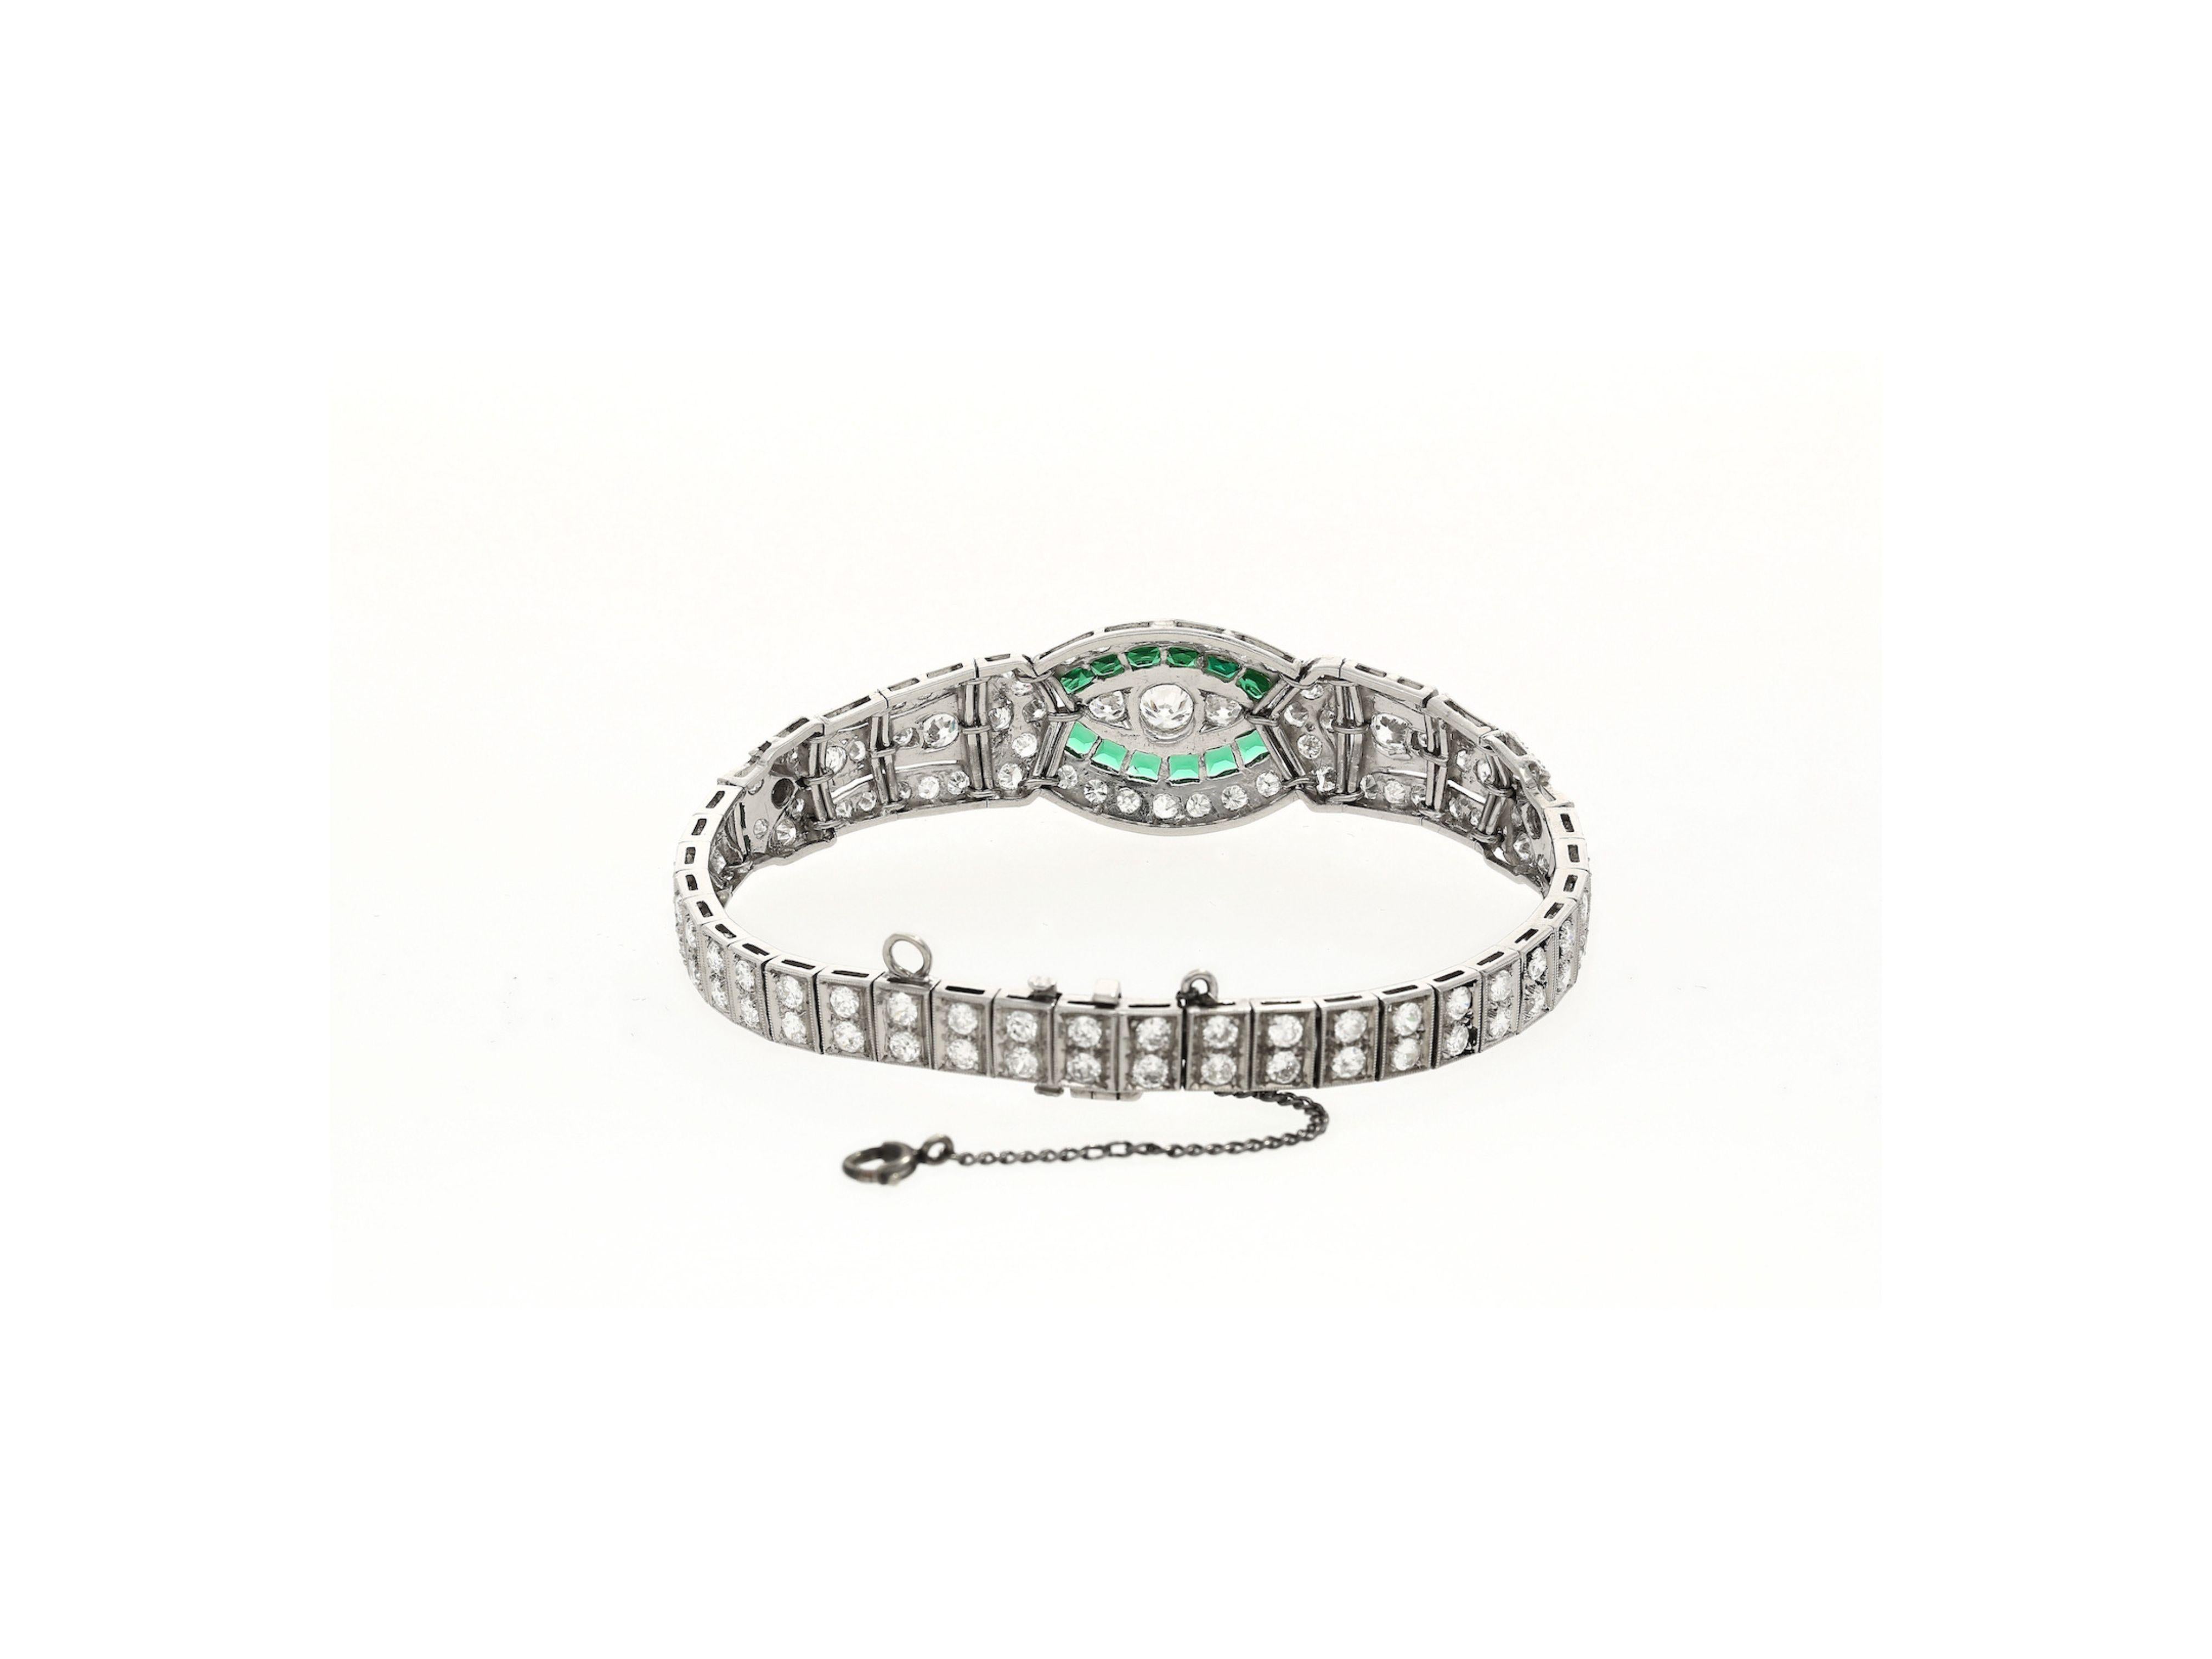 Vintage Art Deco Old Euro Cut Diamond and Emerald Bracelet in Platinum For Sale 3